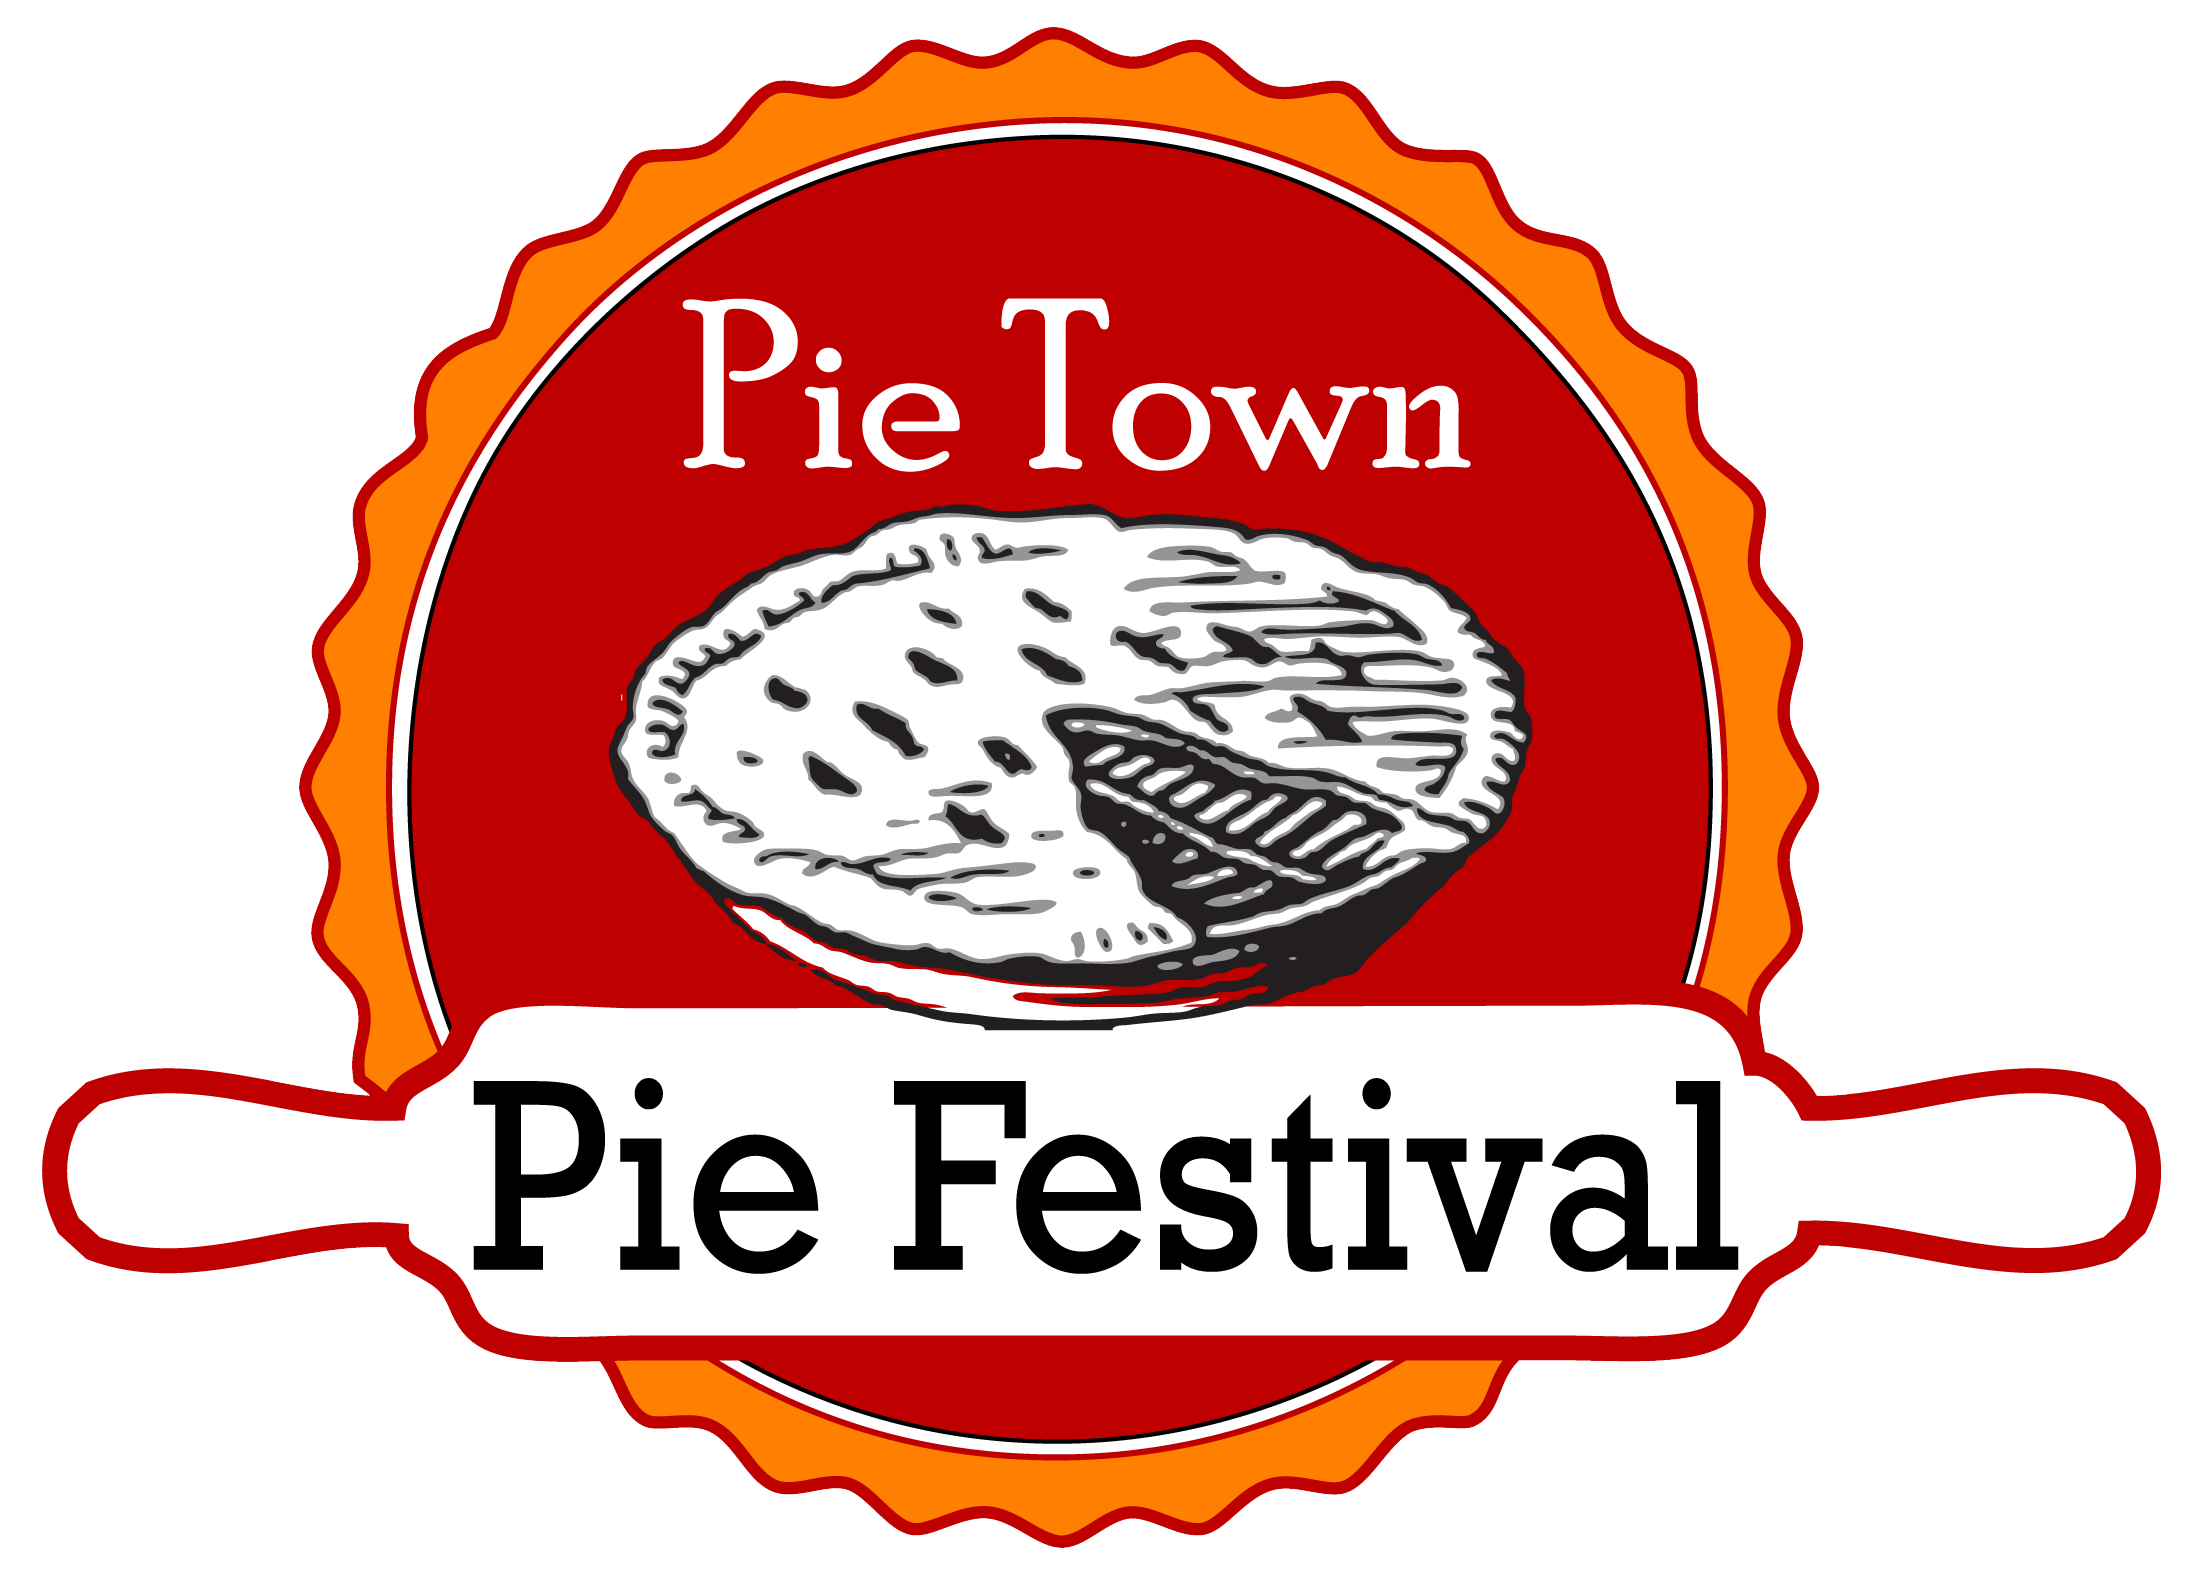 Pie Festival logo